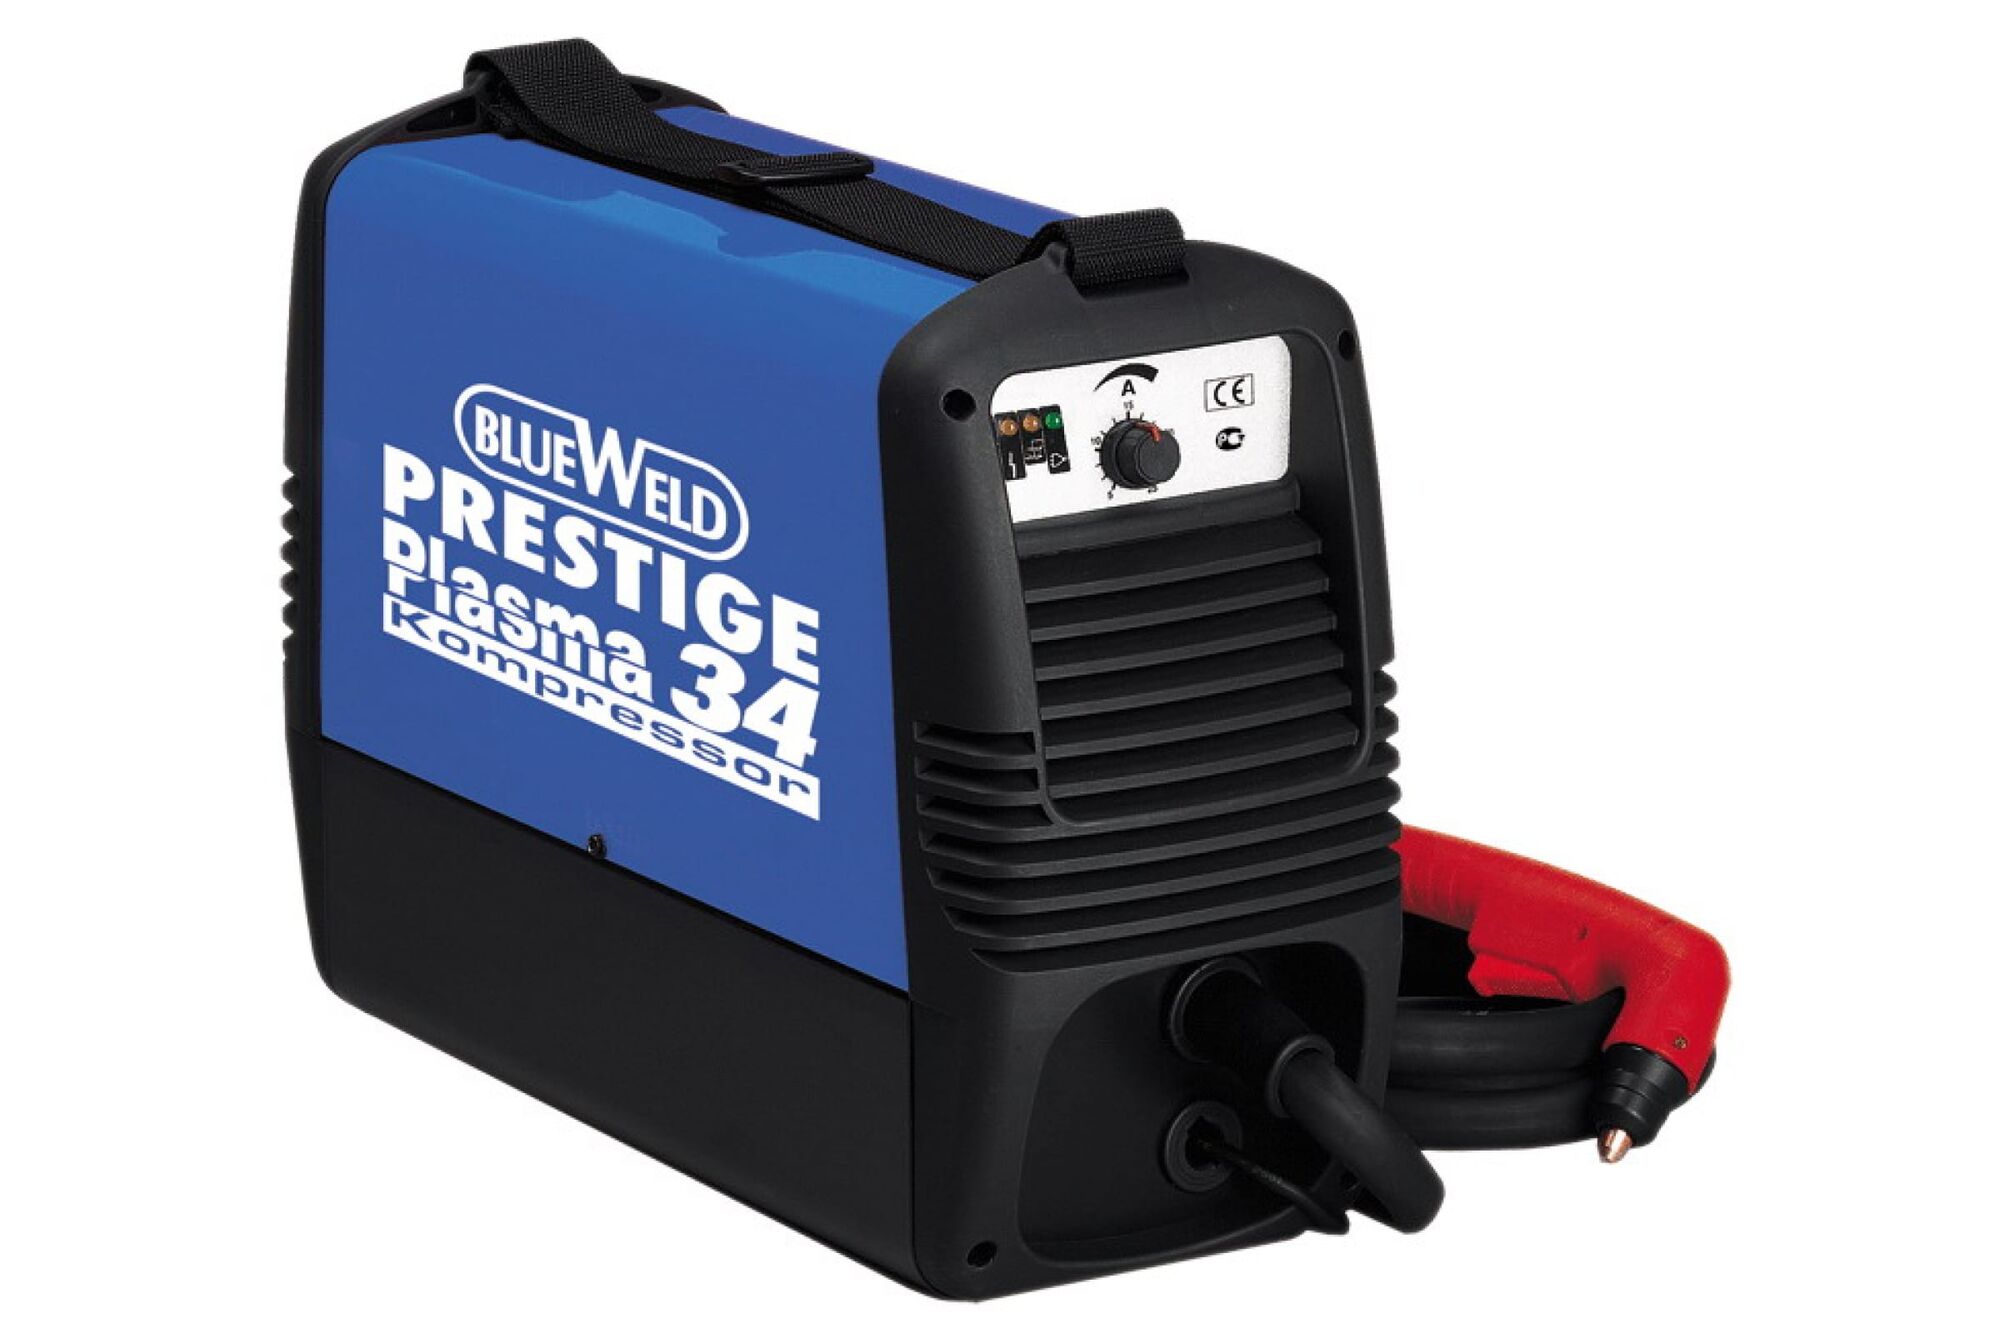 Инвертор плазменной резки BlueWeld Prestige Plasma 34 Kompressor 815361